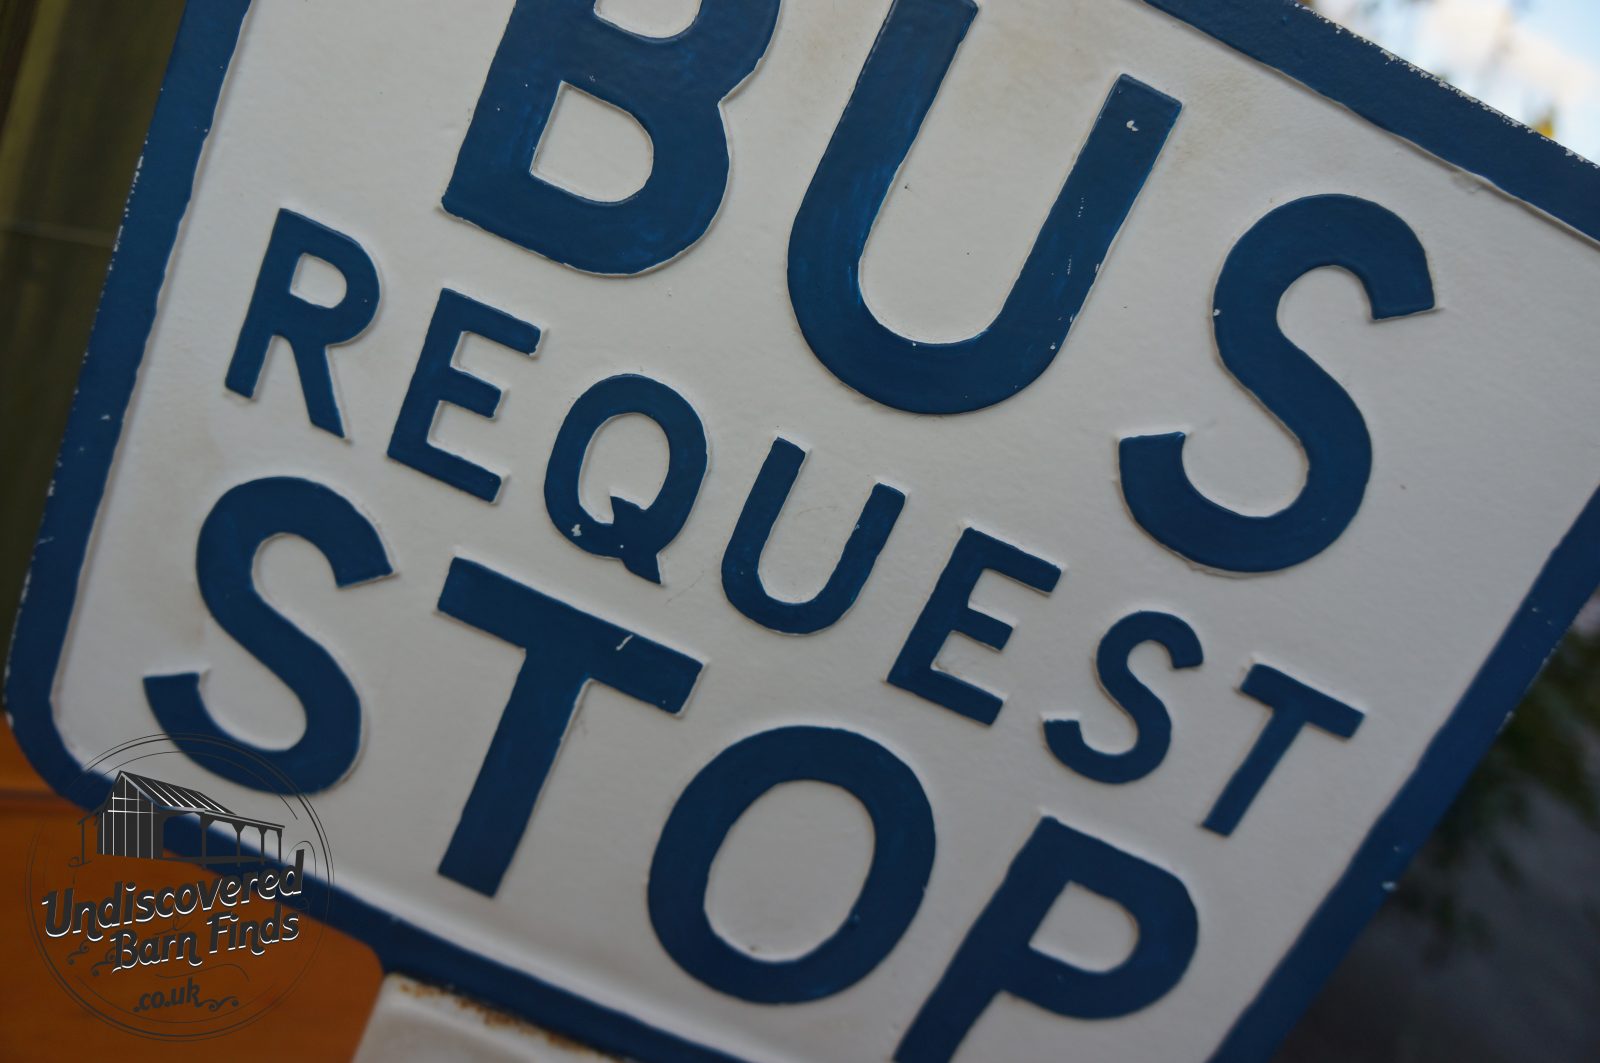 Vintage 50s bus request stop sign